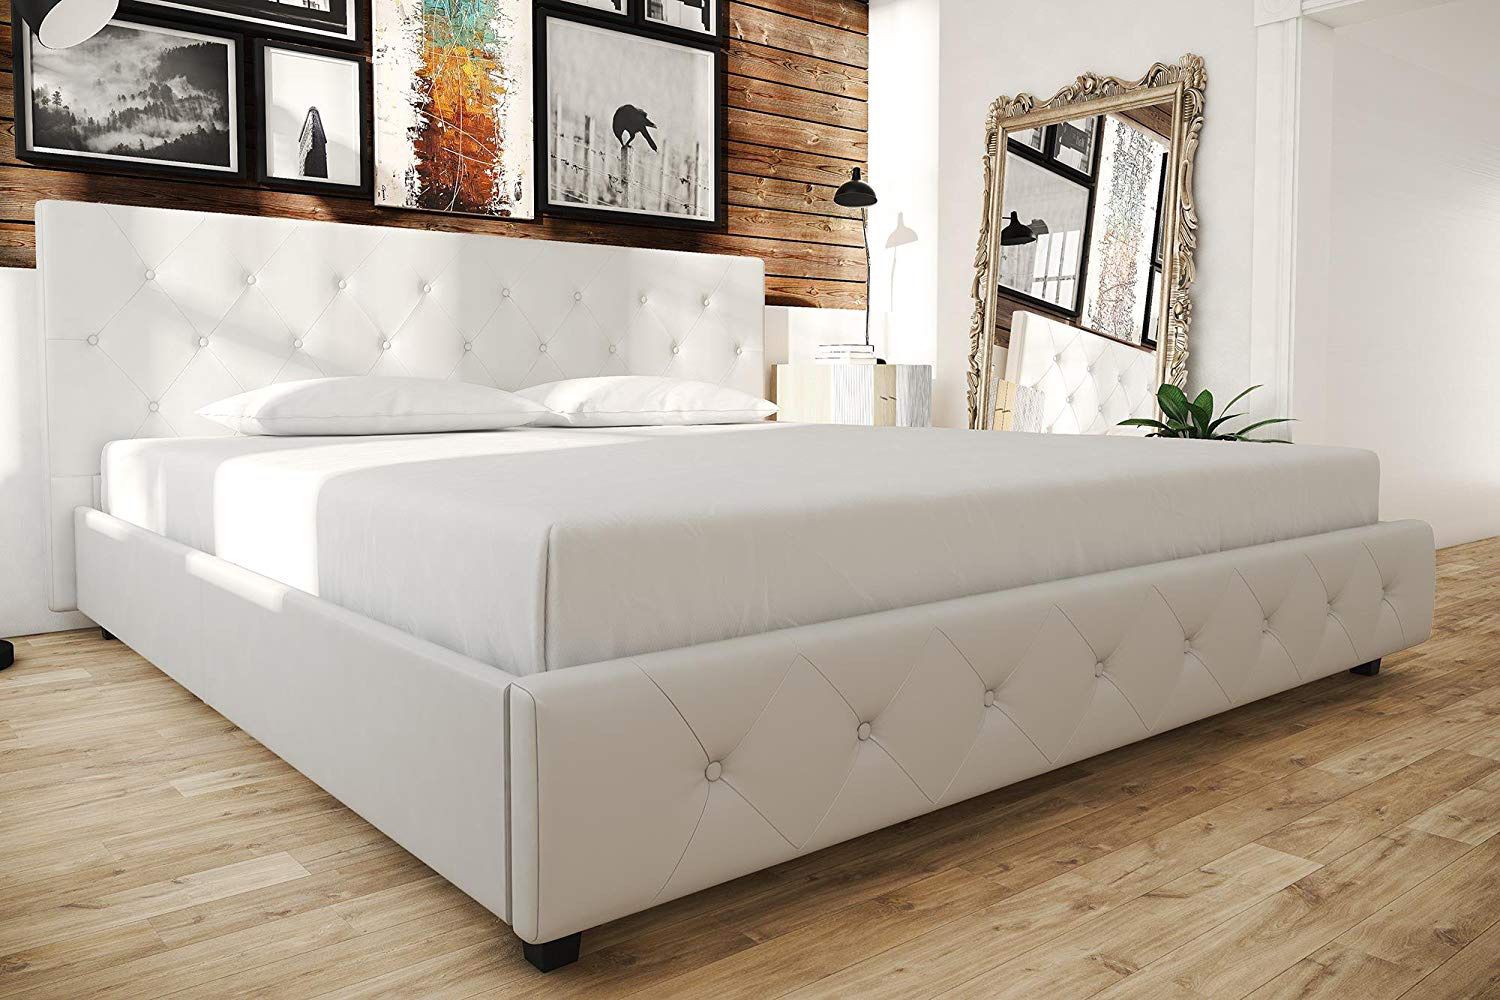 King size frame/mattress/futon for sale